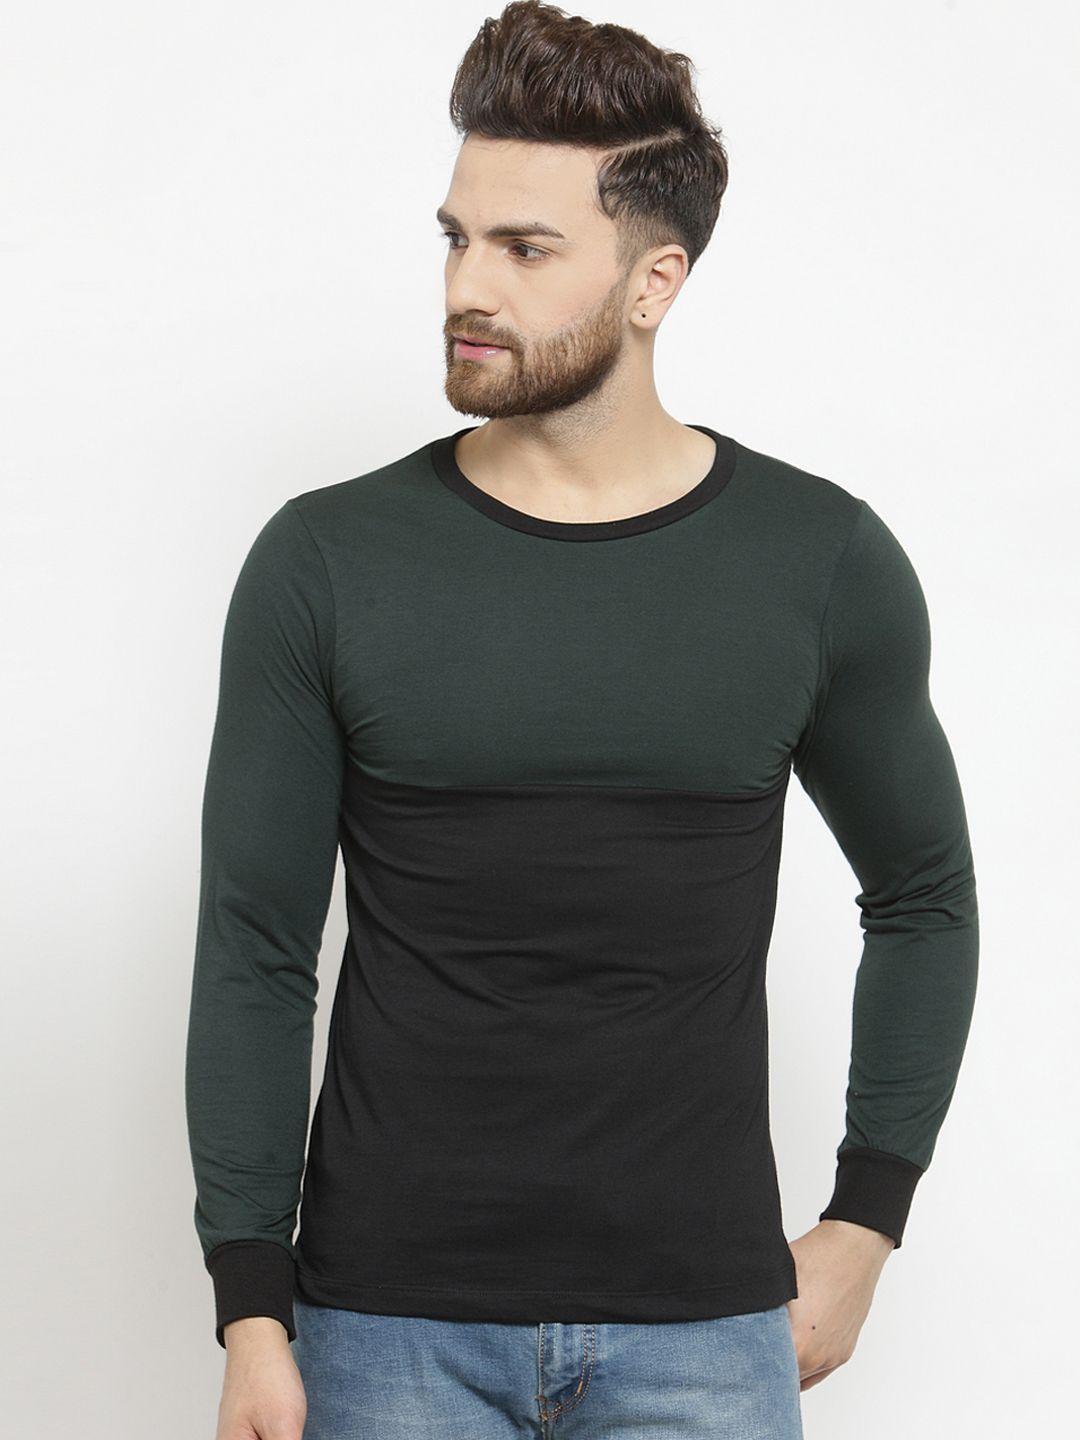 kalt men green & black colourblocked round neck t-shirt